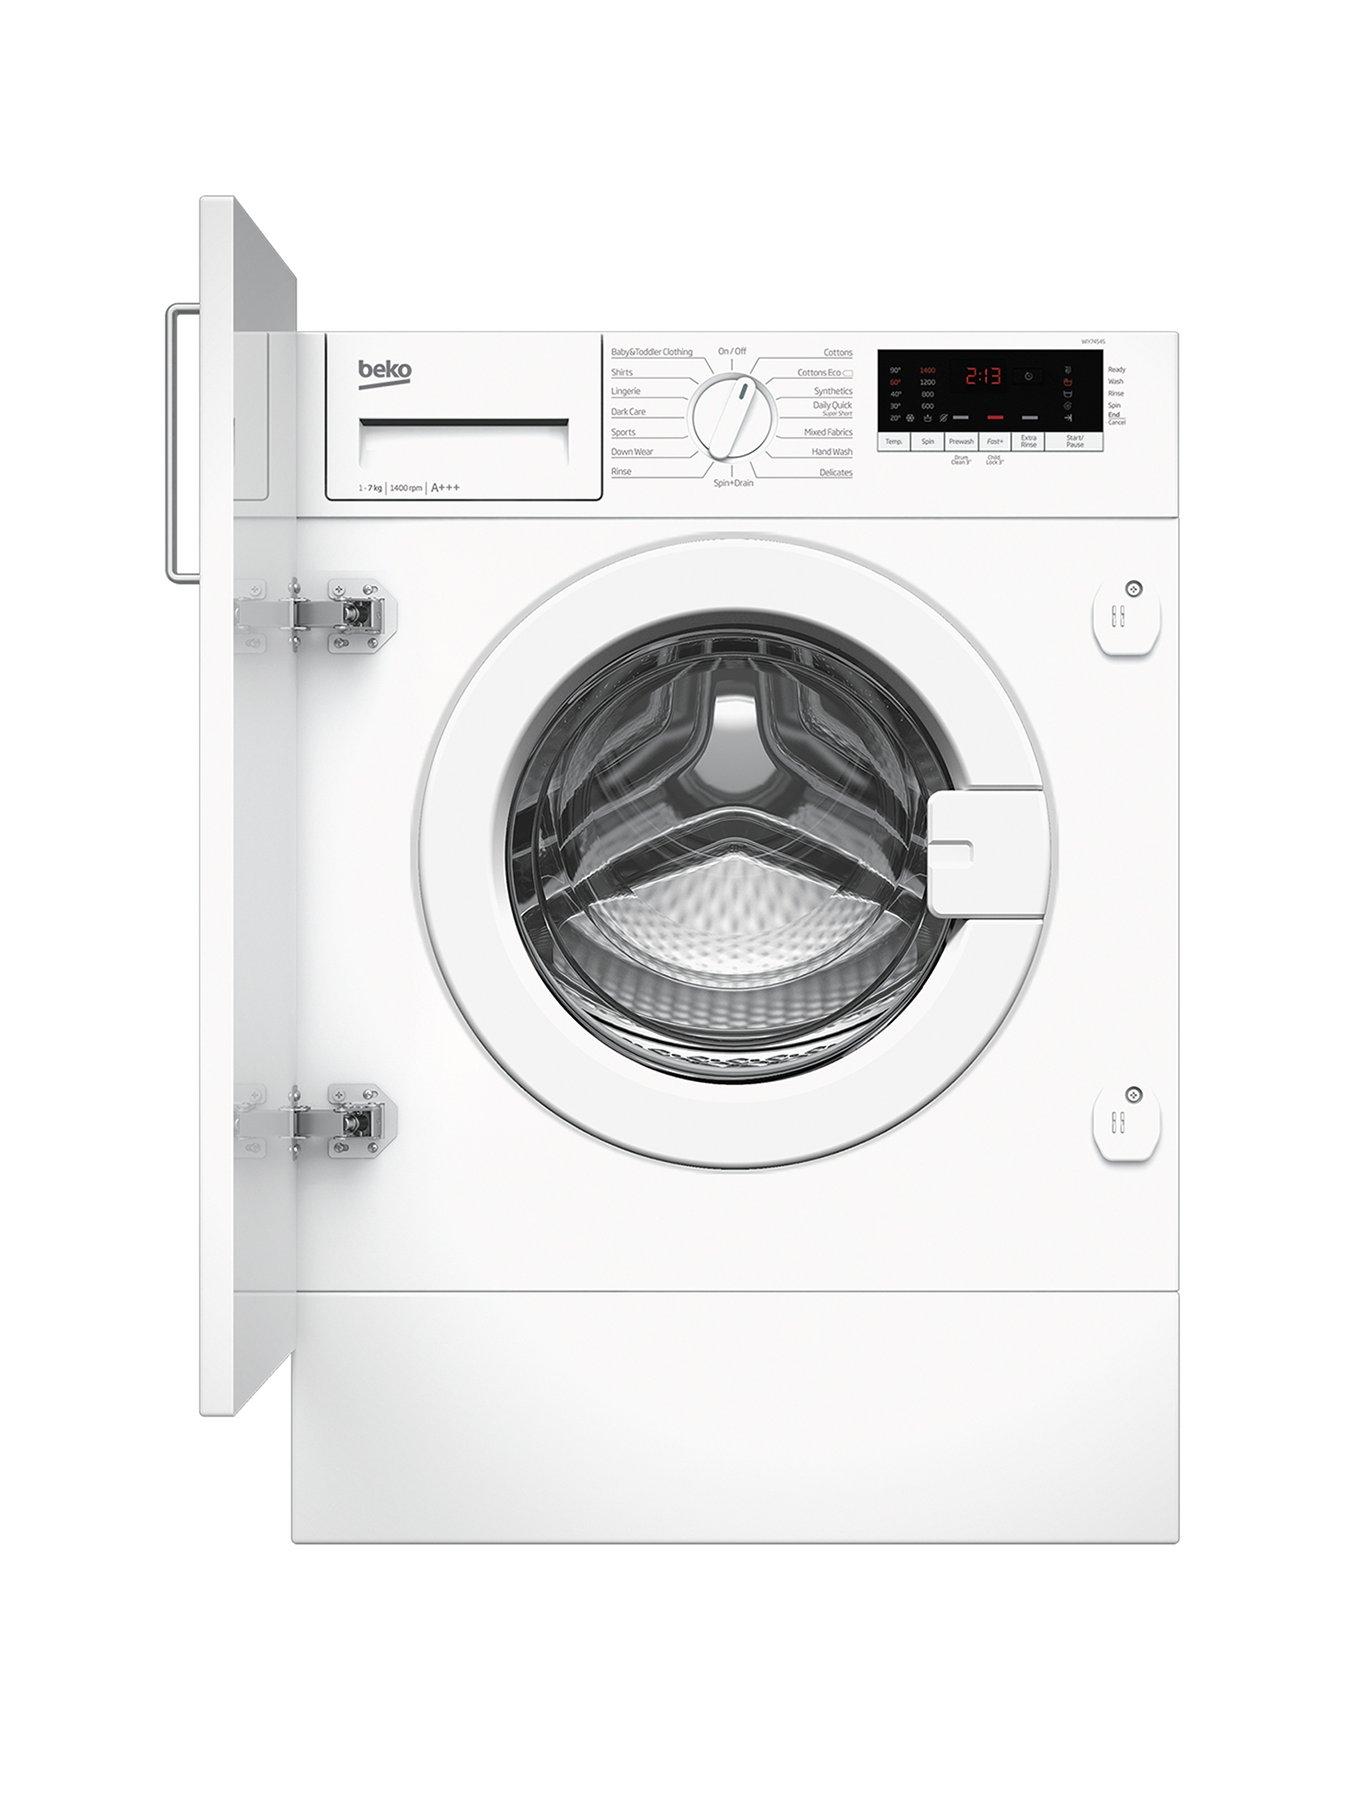 Beko Wiy74545 7Kg Load, 1400 Spin Built-In Washing Machine – White